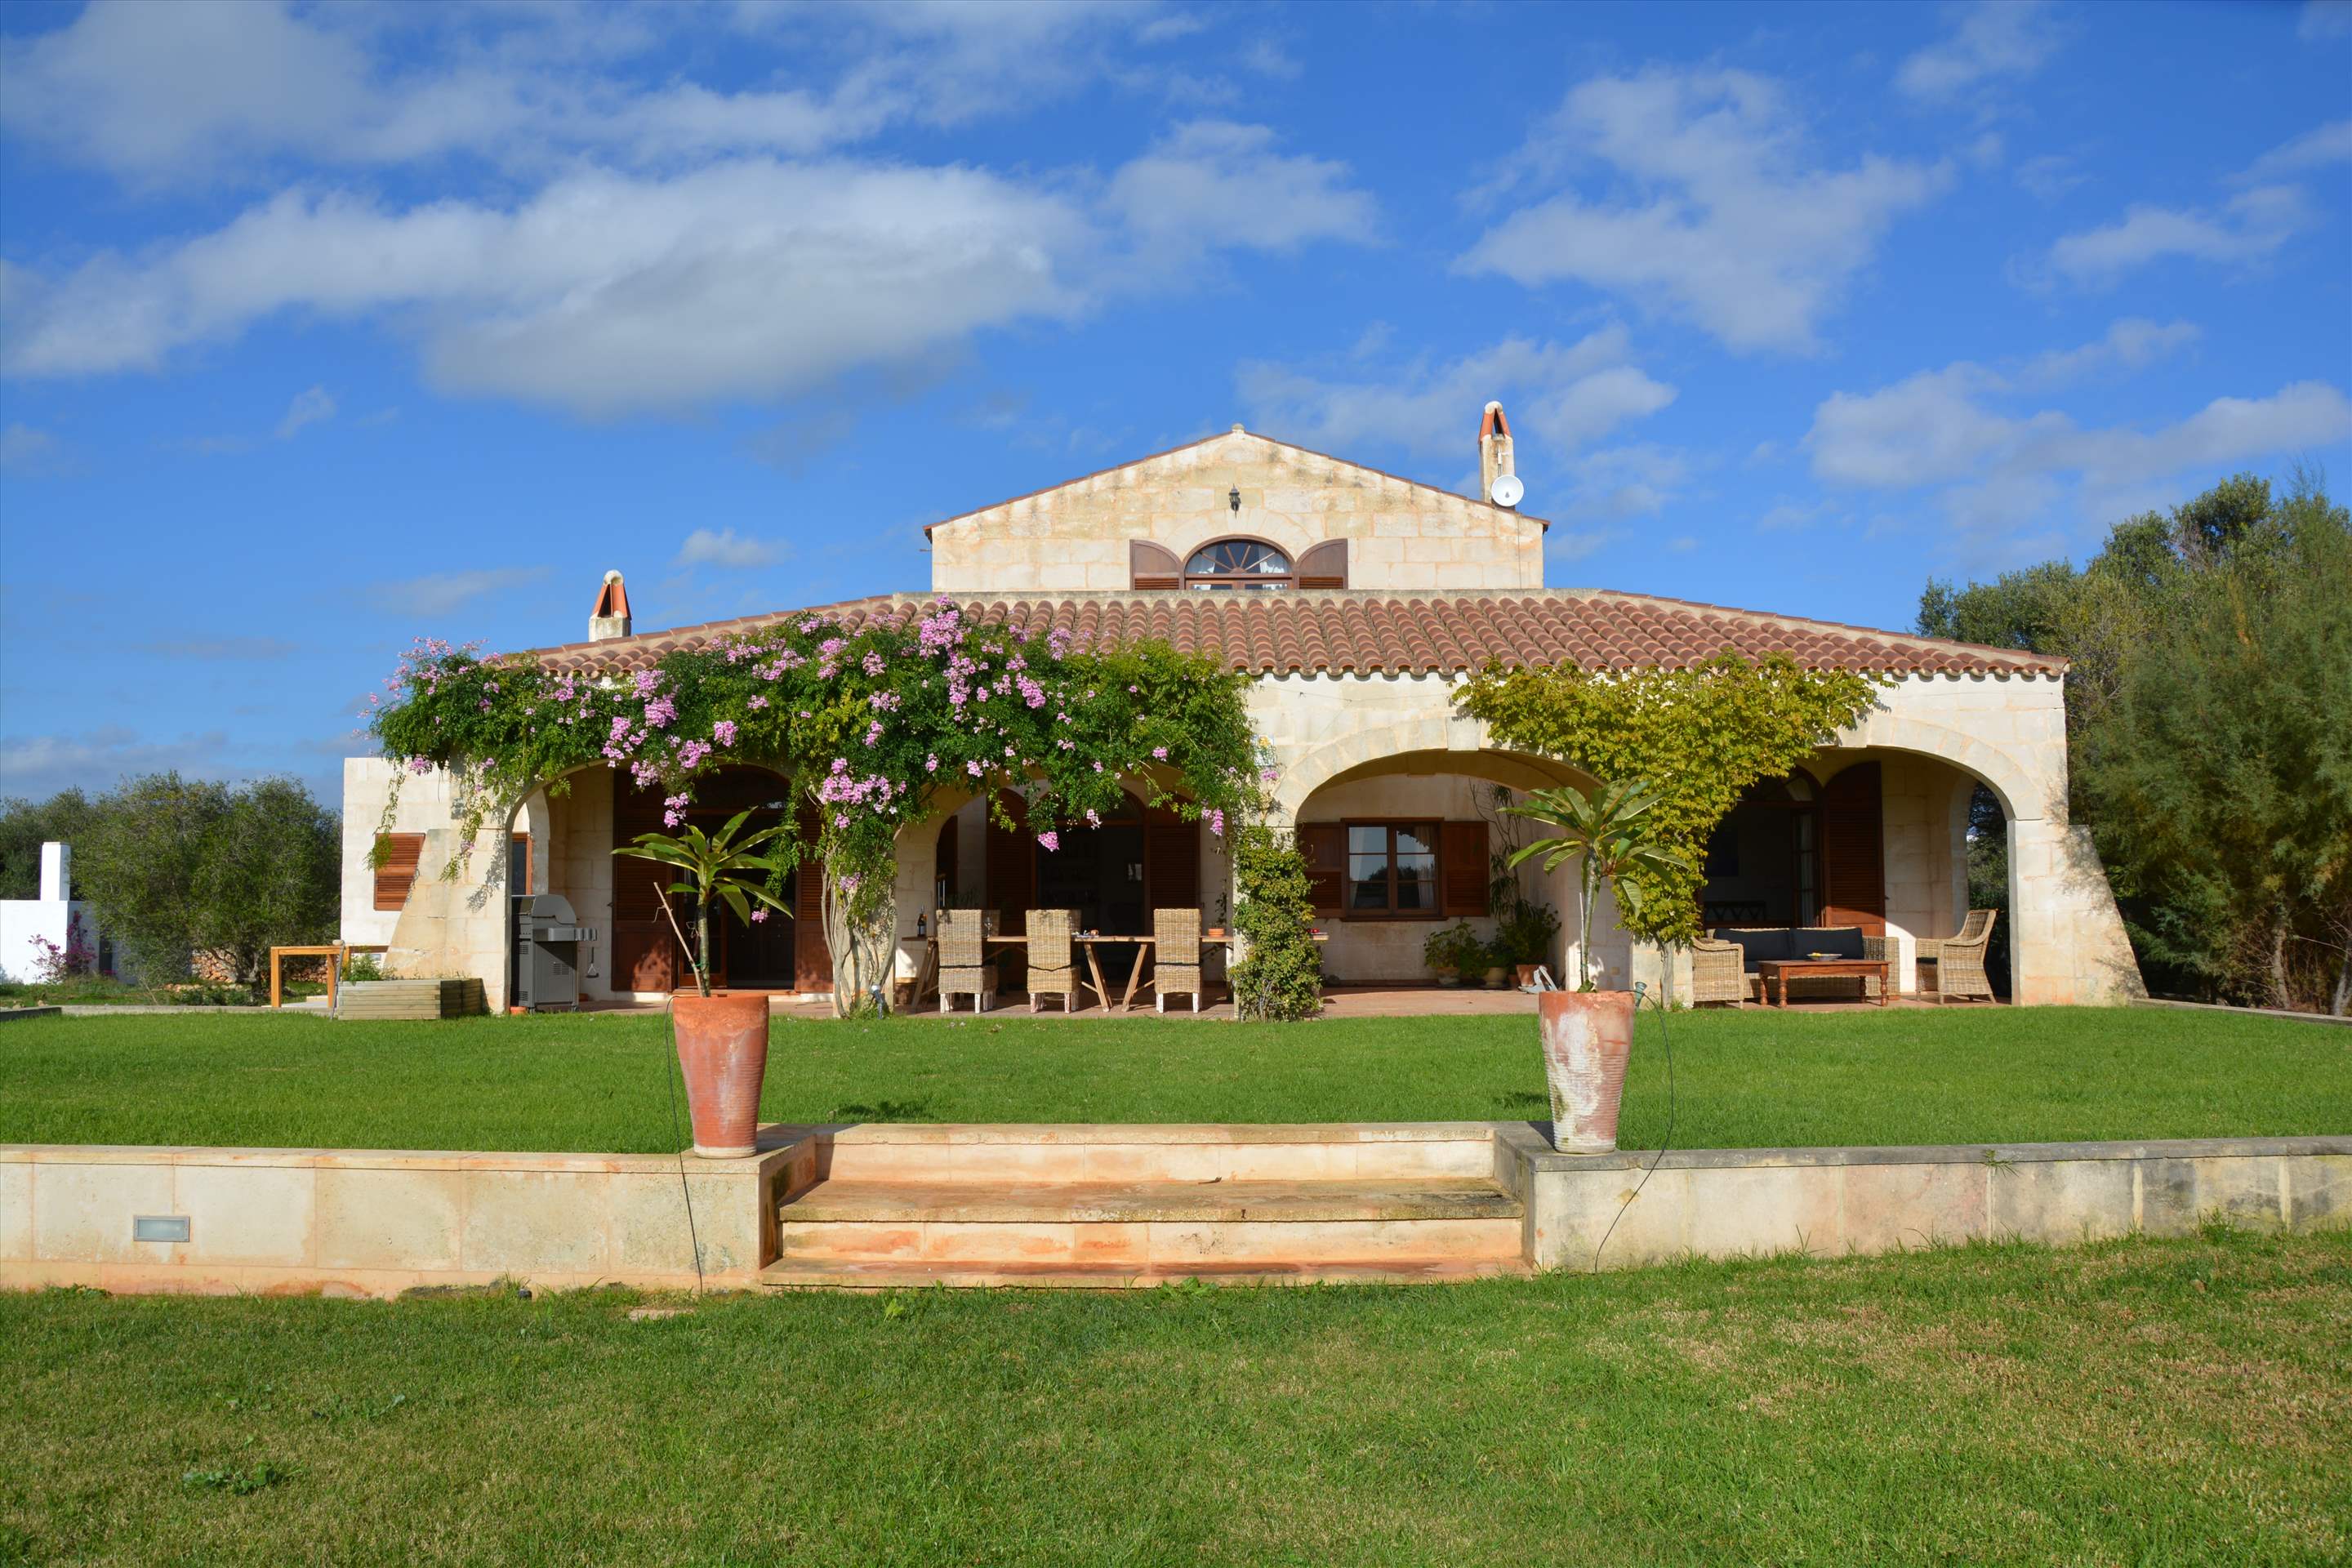 Les Arcs, 5 bedroom villa in Mahon, San Luis & South East, Menorca Photo #2